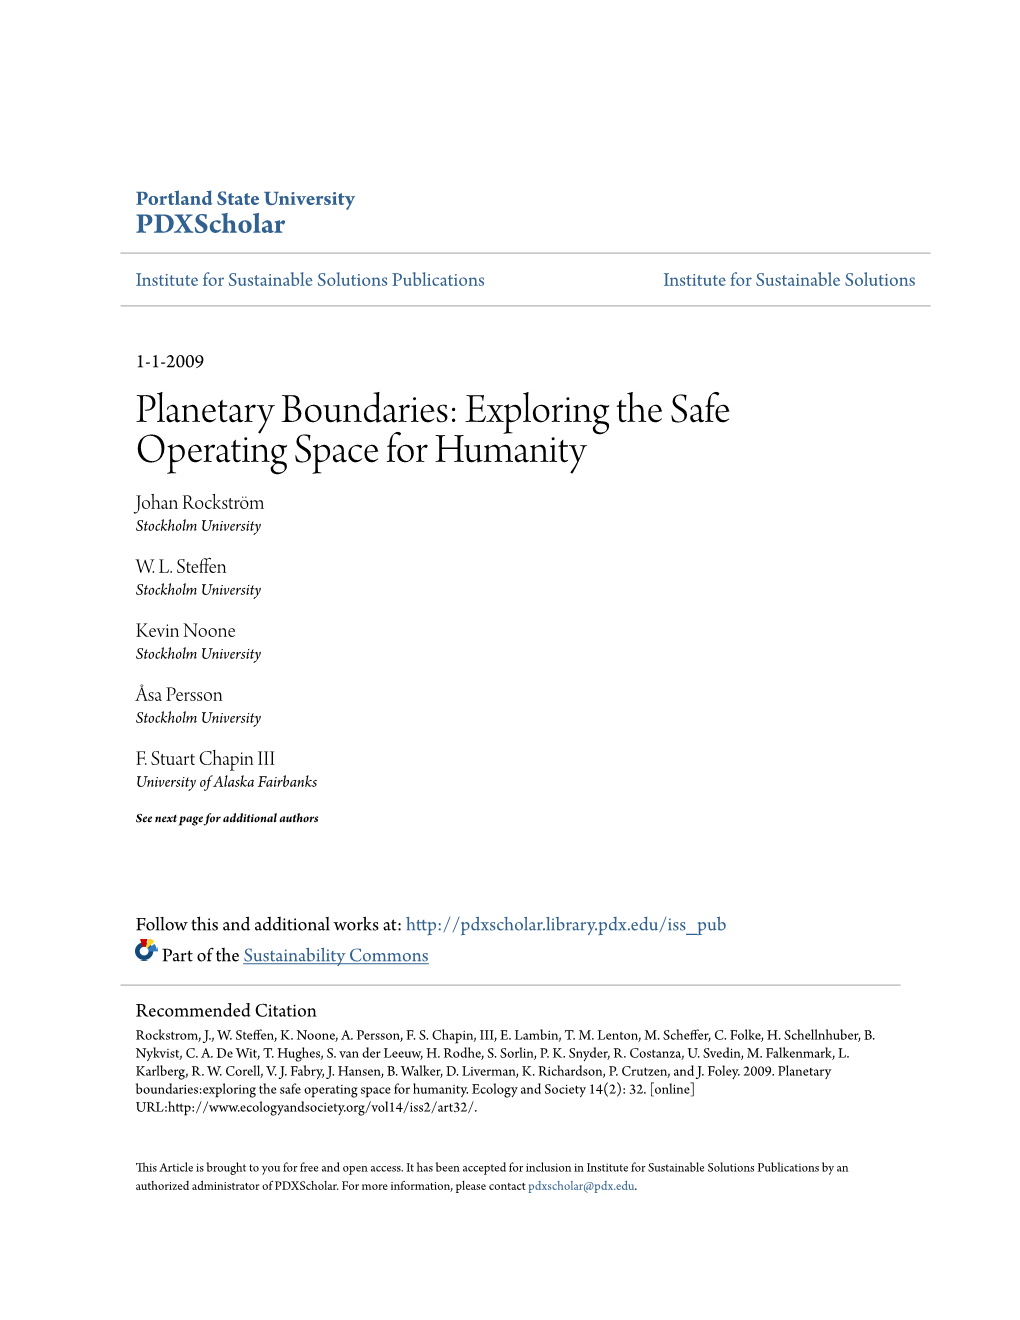 Planetary Boundaries: Exploring the Safe Operating Space for Humanity Johan Rockström Stockholm University